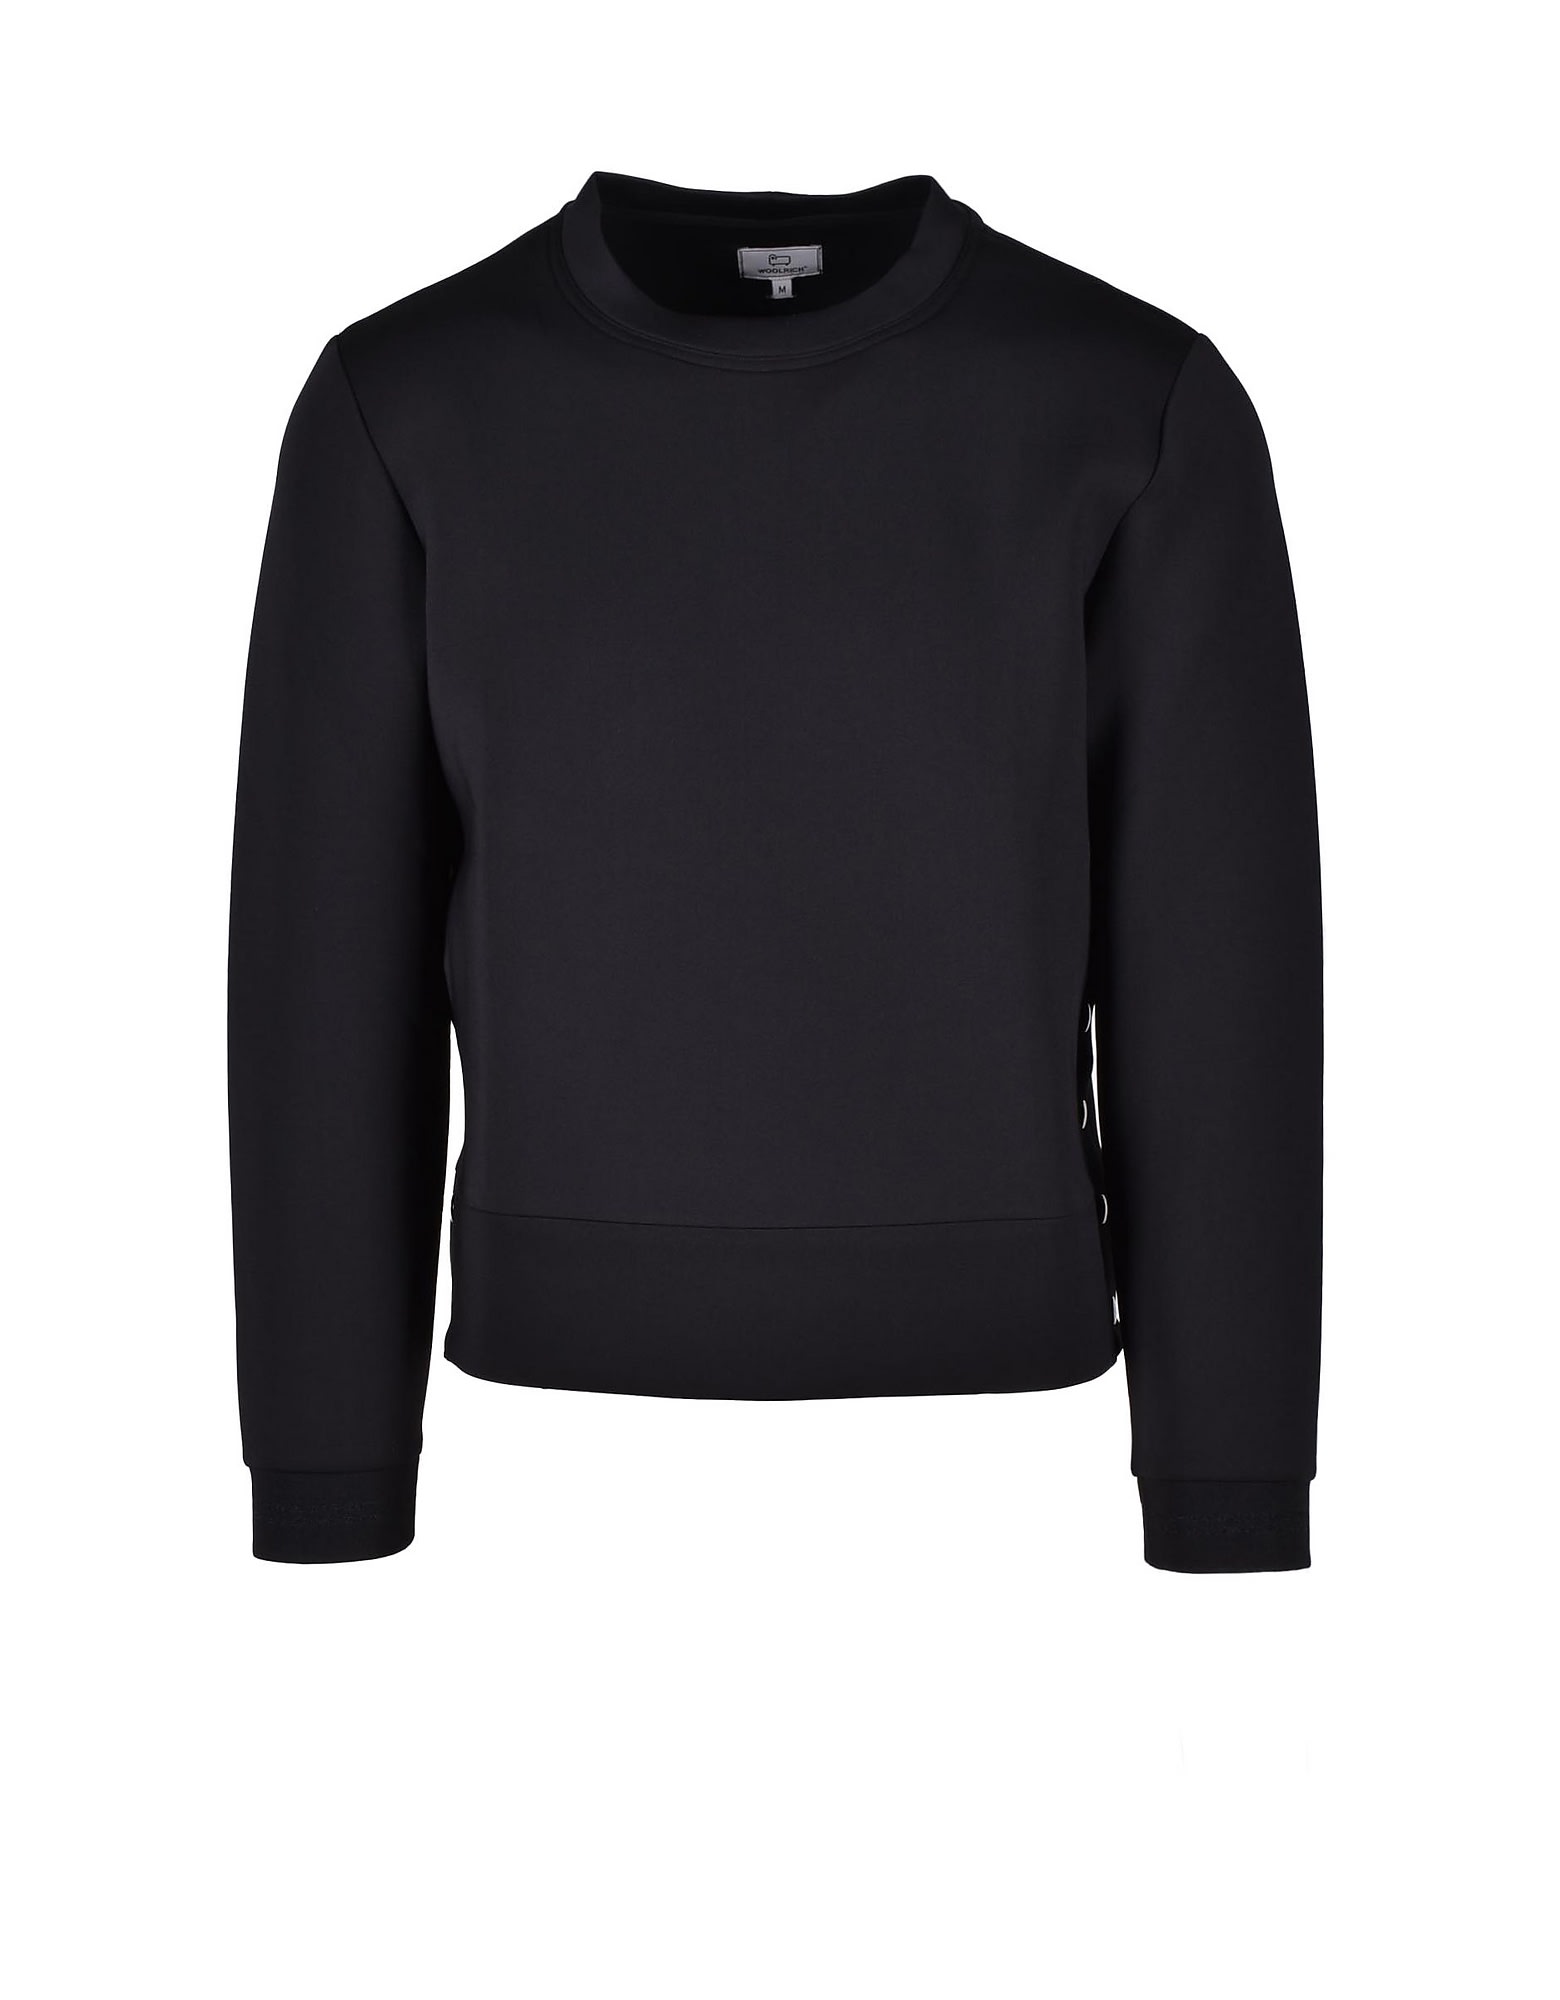 Woolrich Womens Black Sweatshirt